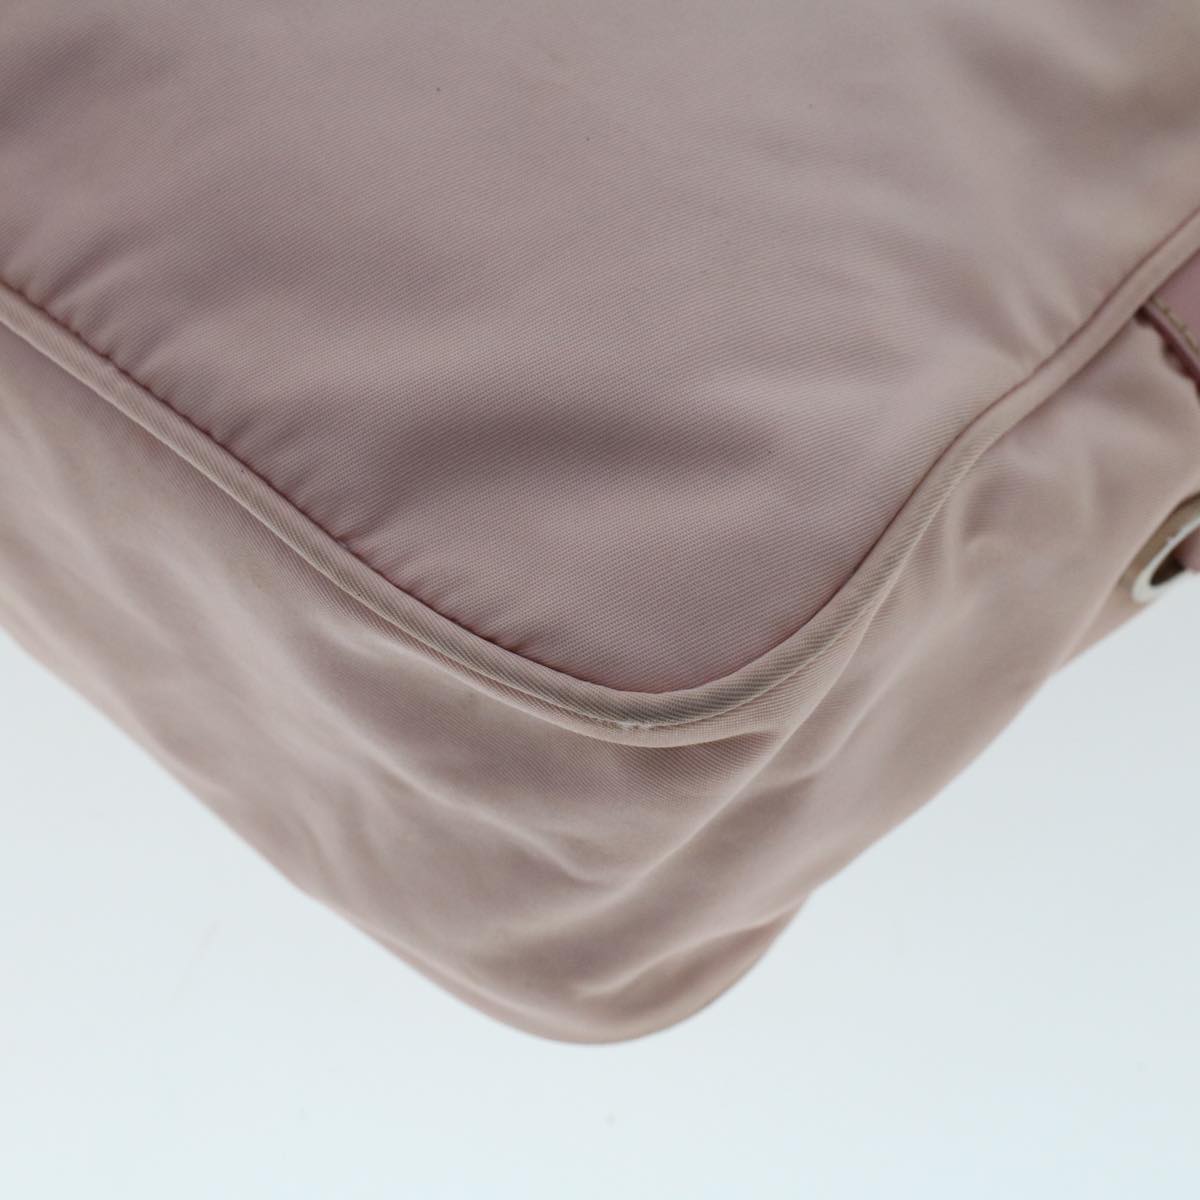 PRADA Shoulder Bag Nylon Pink Auth 48006